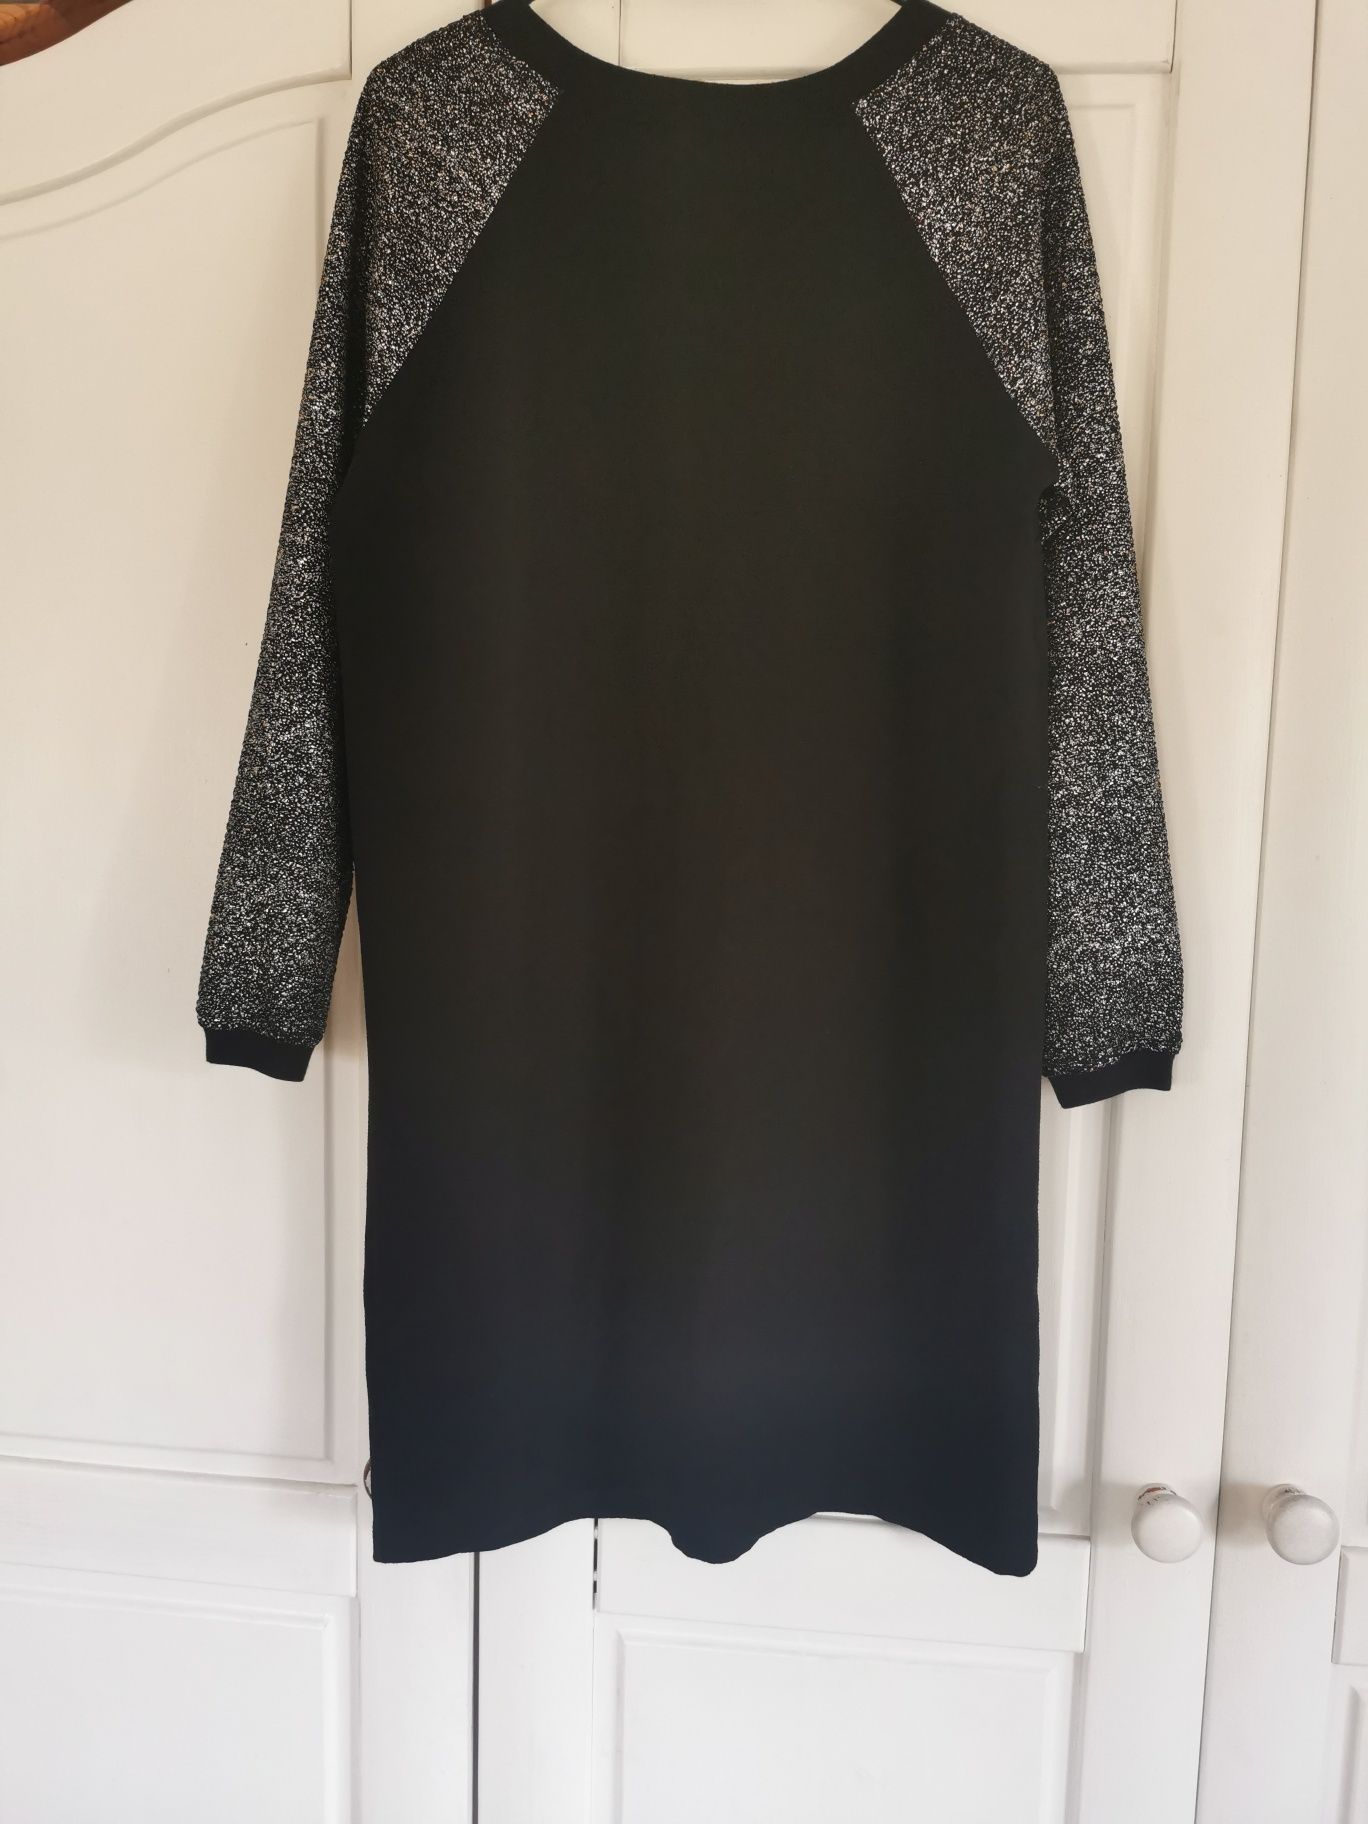 Sukienka czarna z brokatem 42 XL